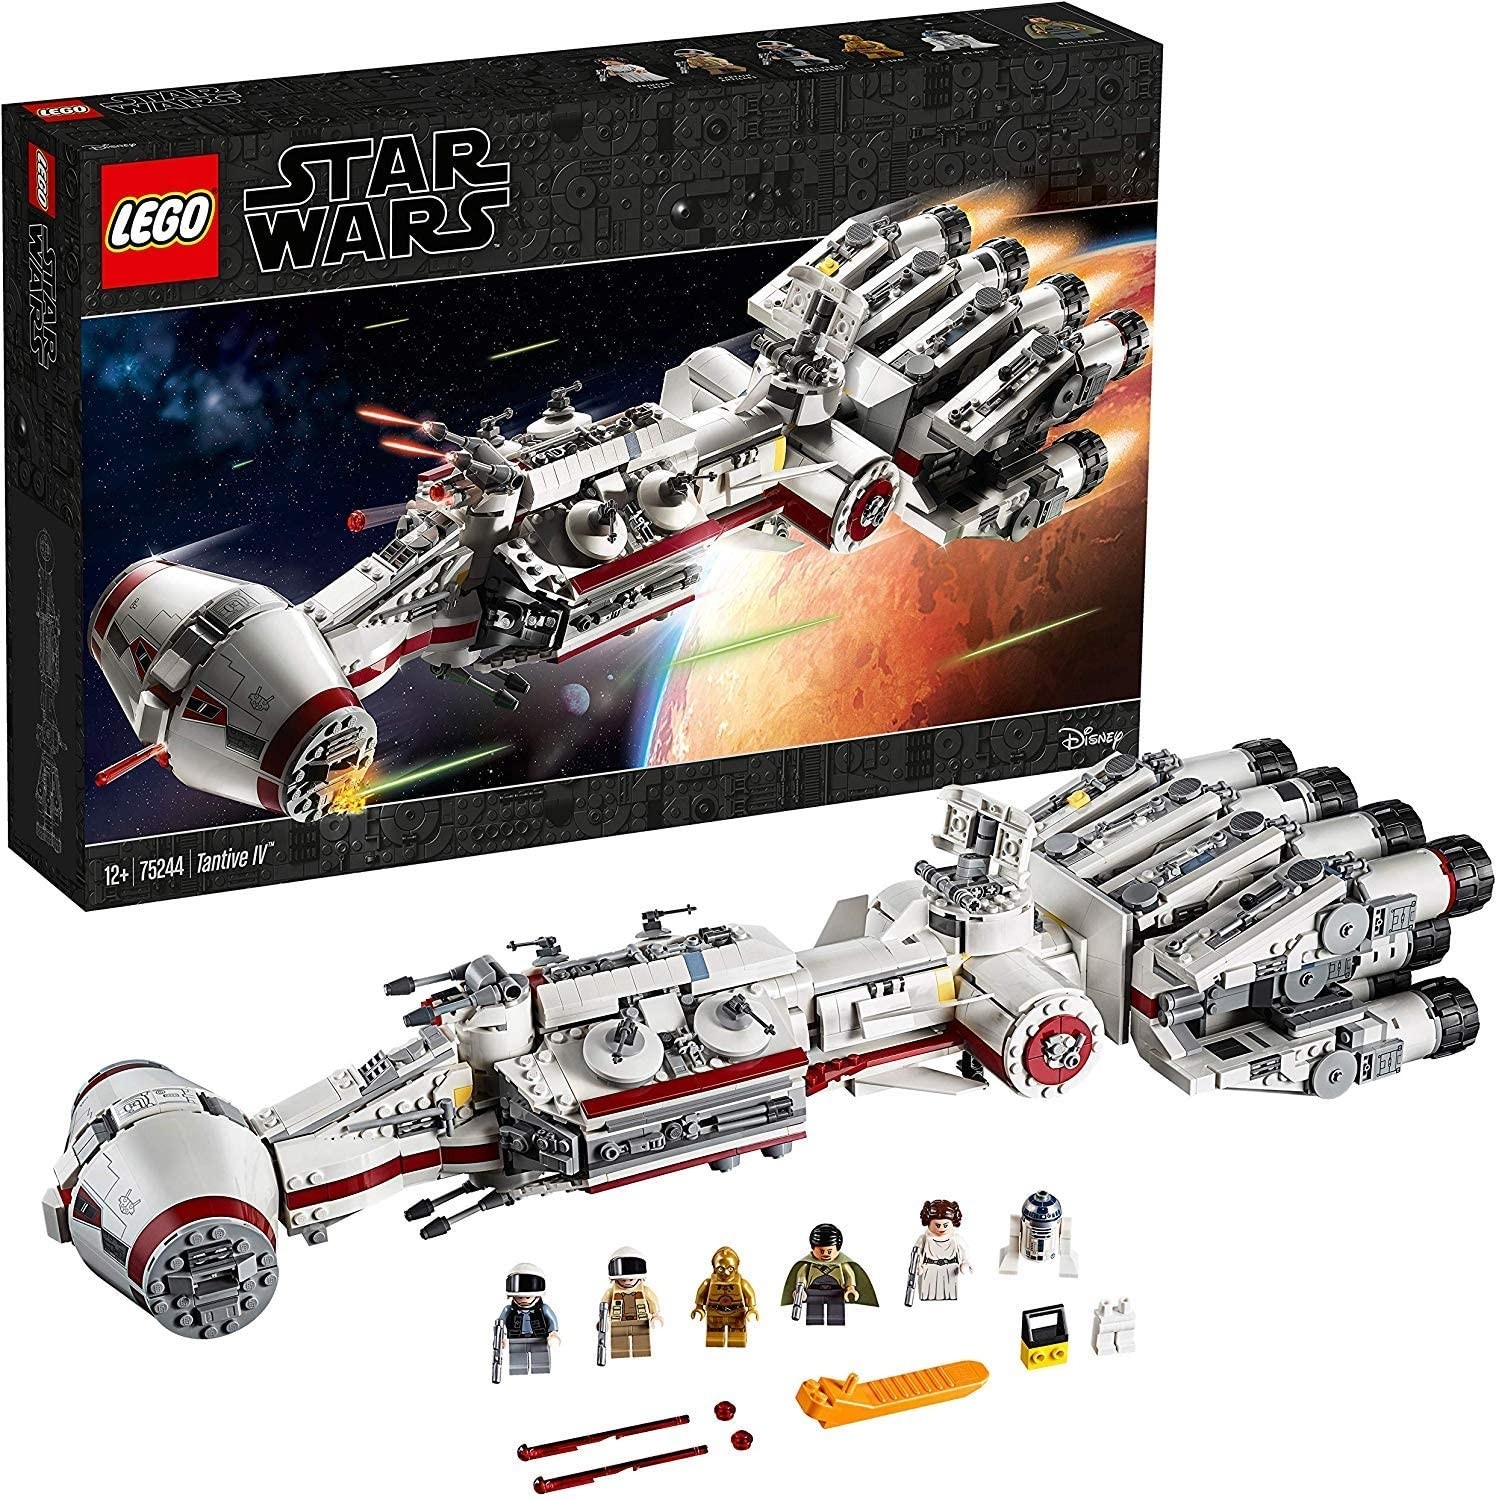 Lego Star wars 75244 Tantive IV™